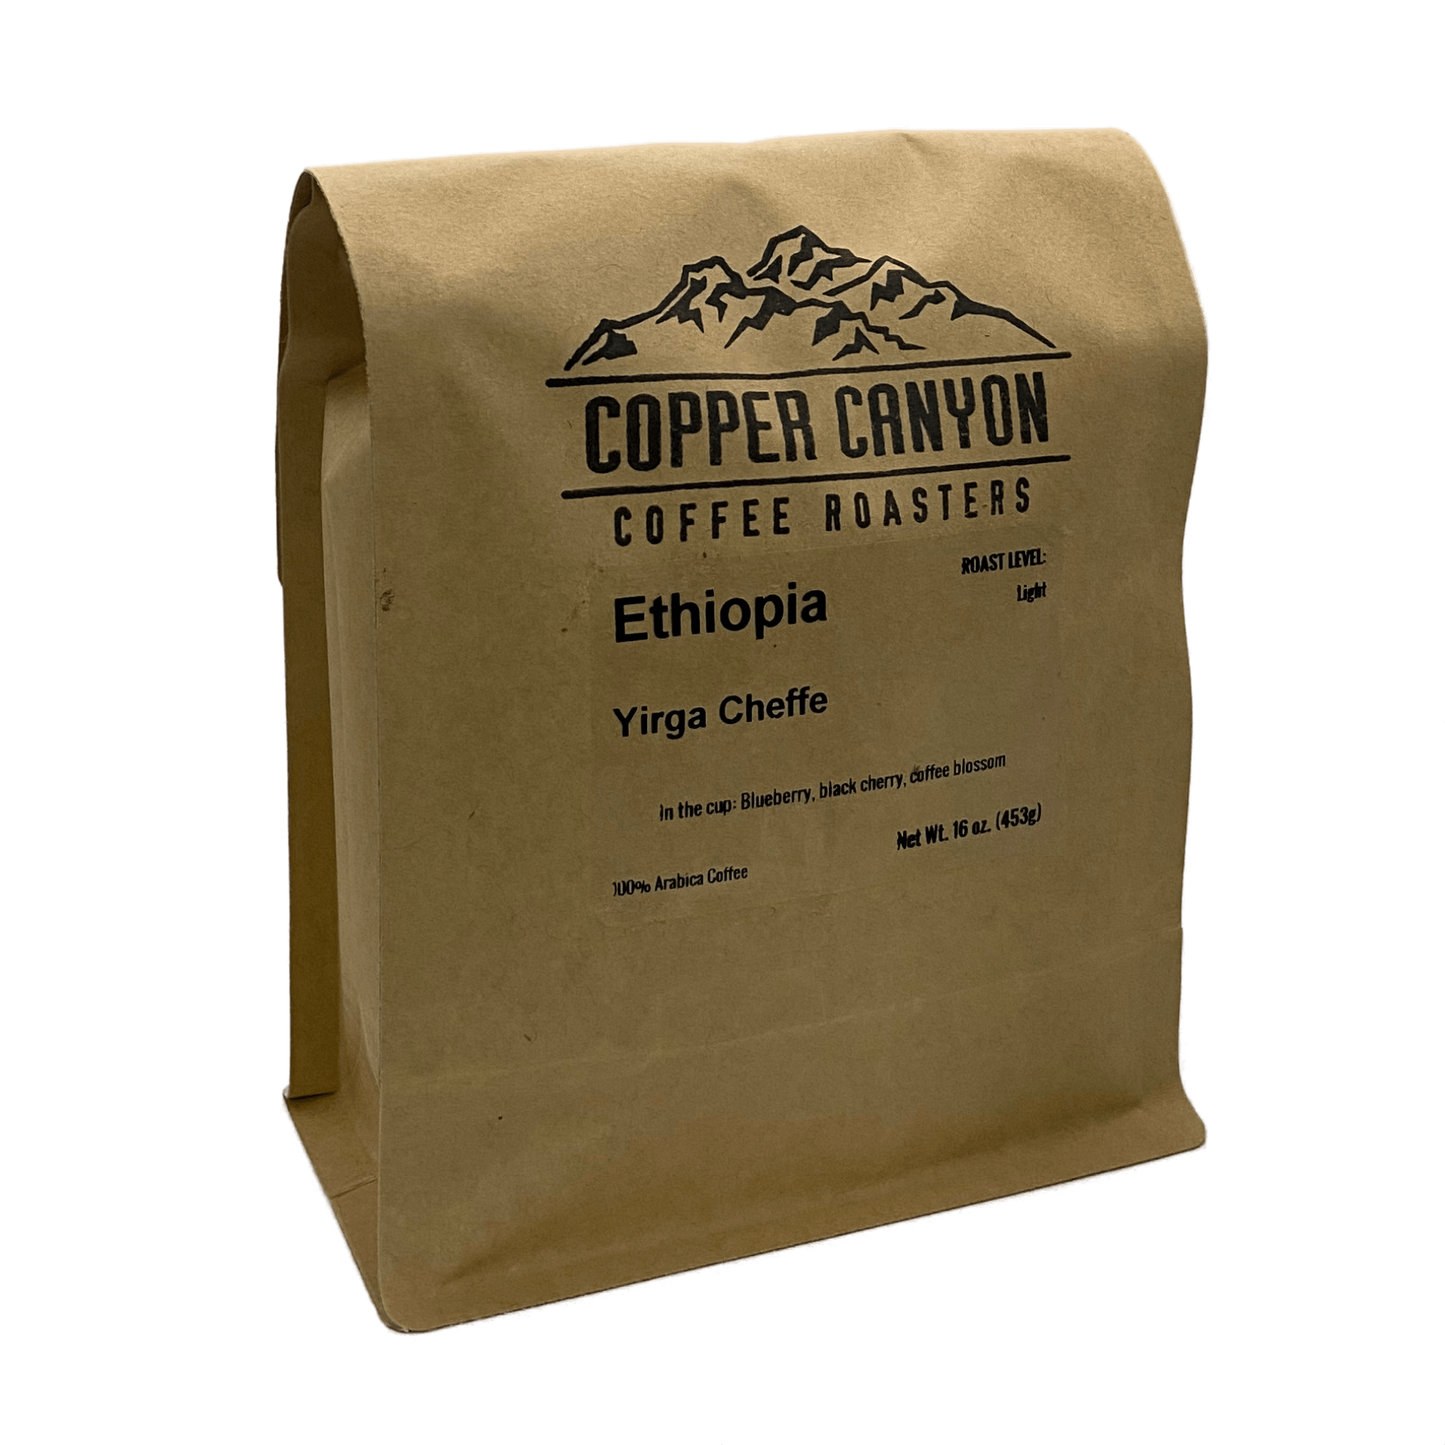 16 oz bag of Ethiopia, single origin, light roast coffee